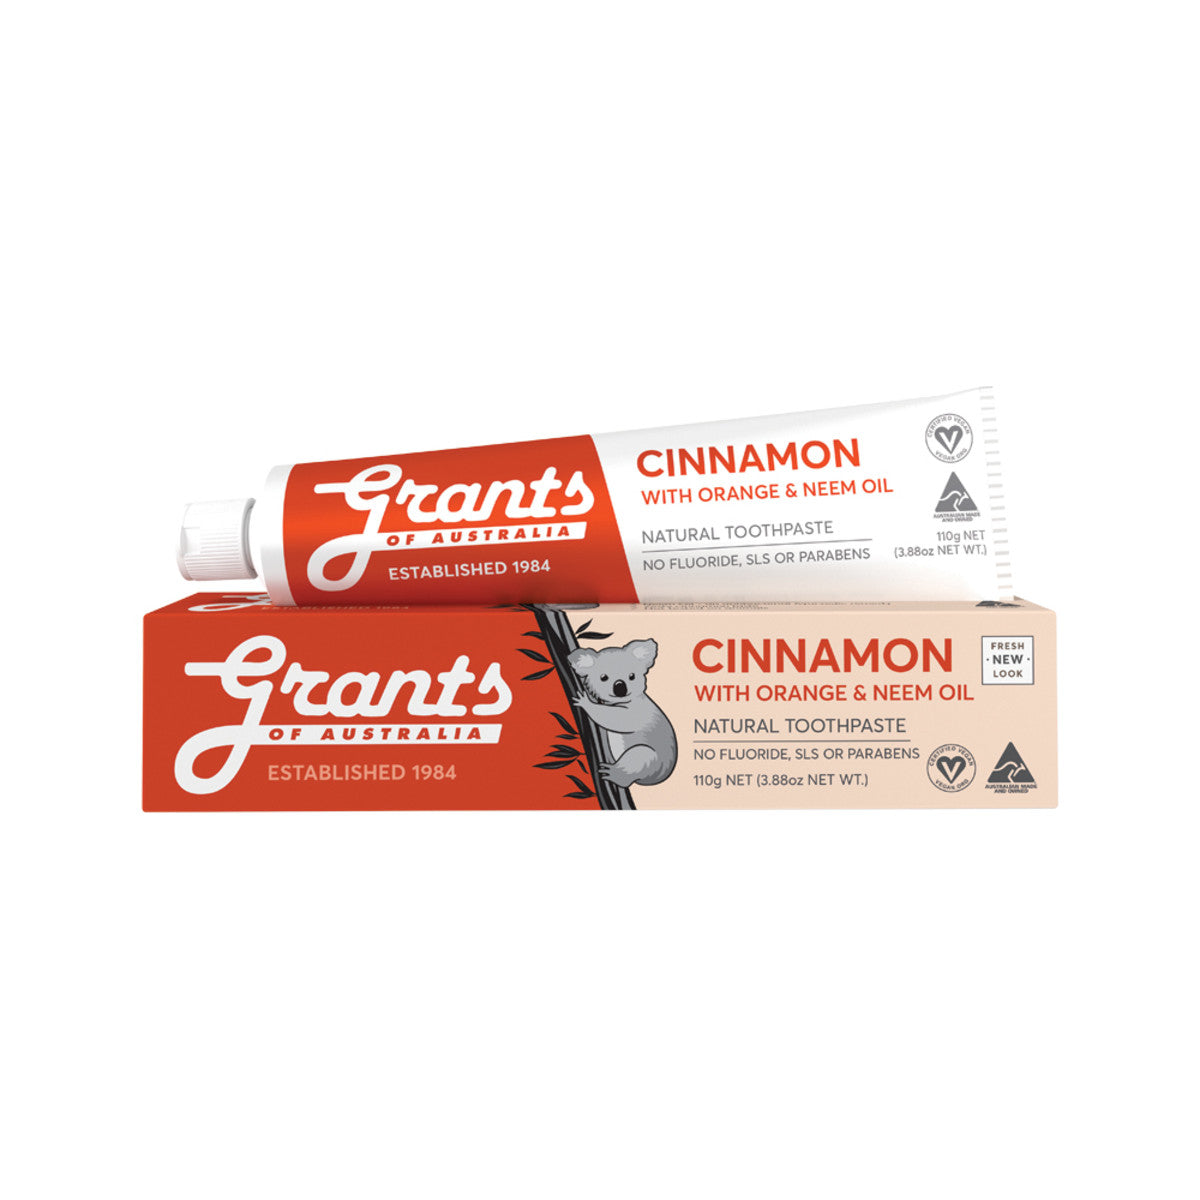 Grants - Natural Toothpaste (Cinnamon with Orange & Neem Oil)